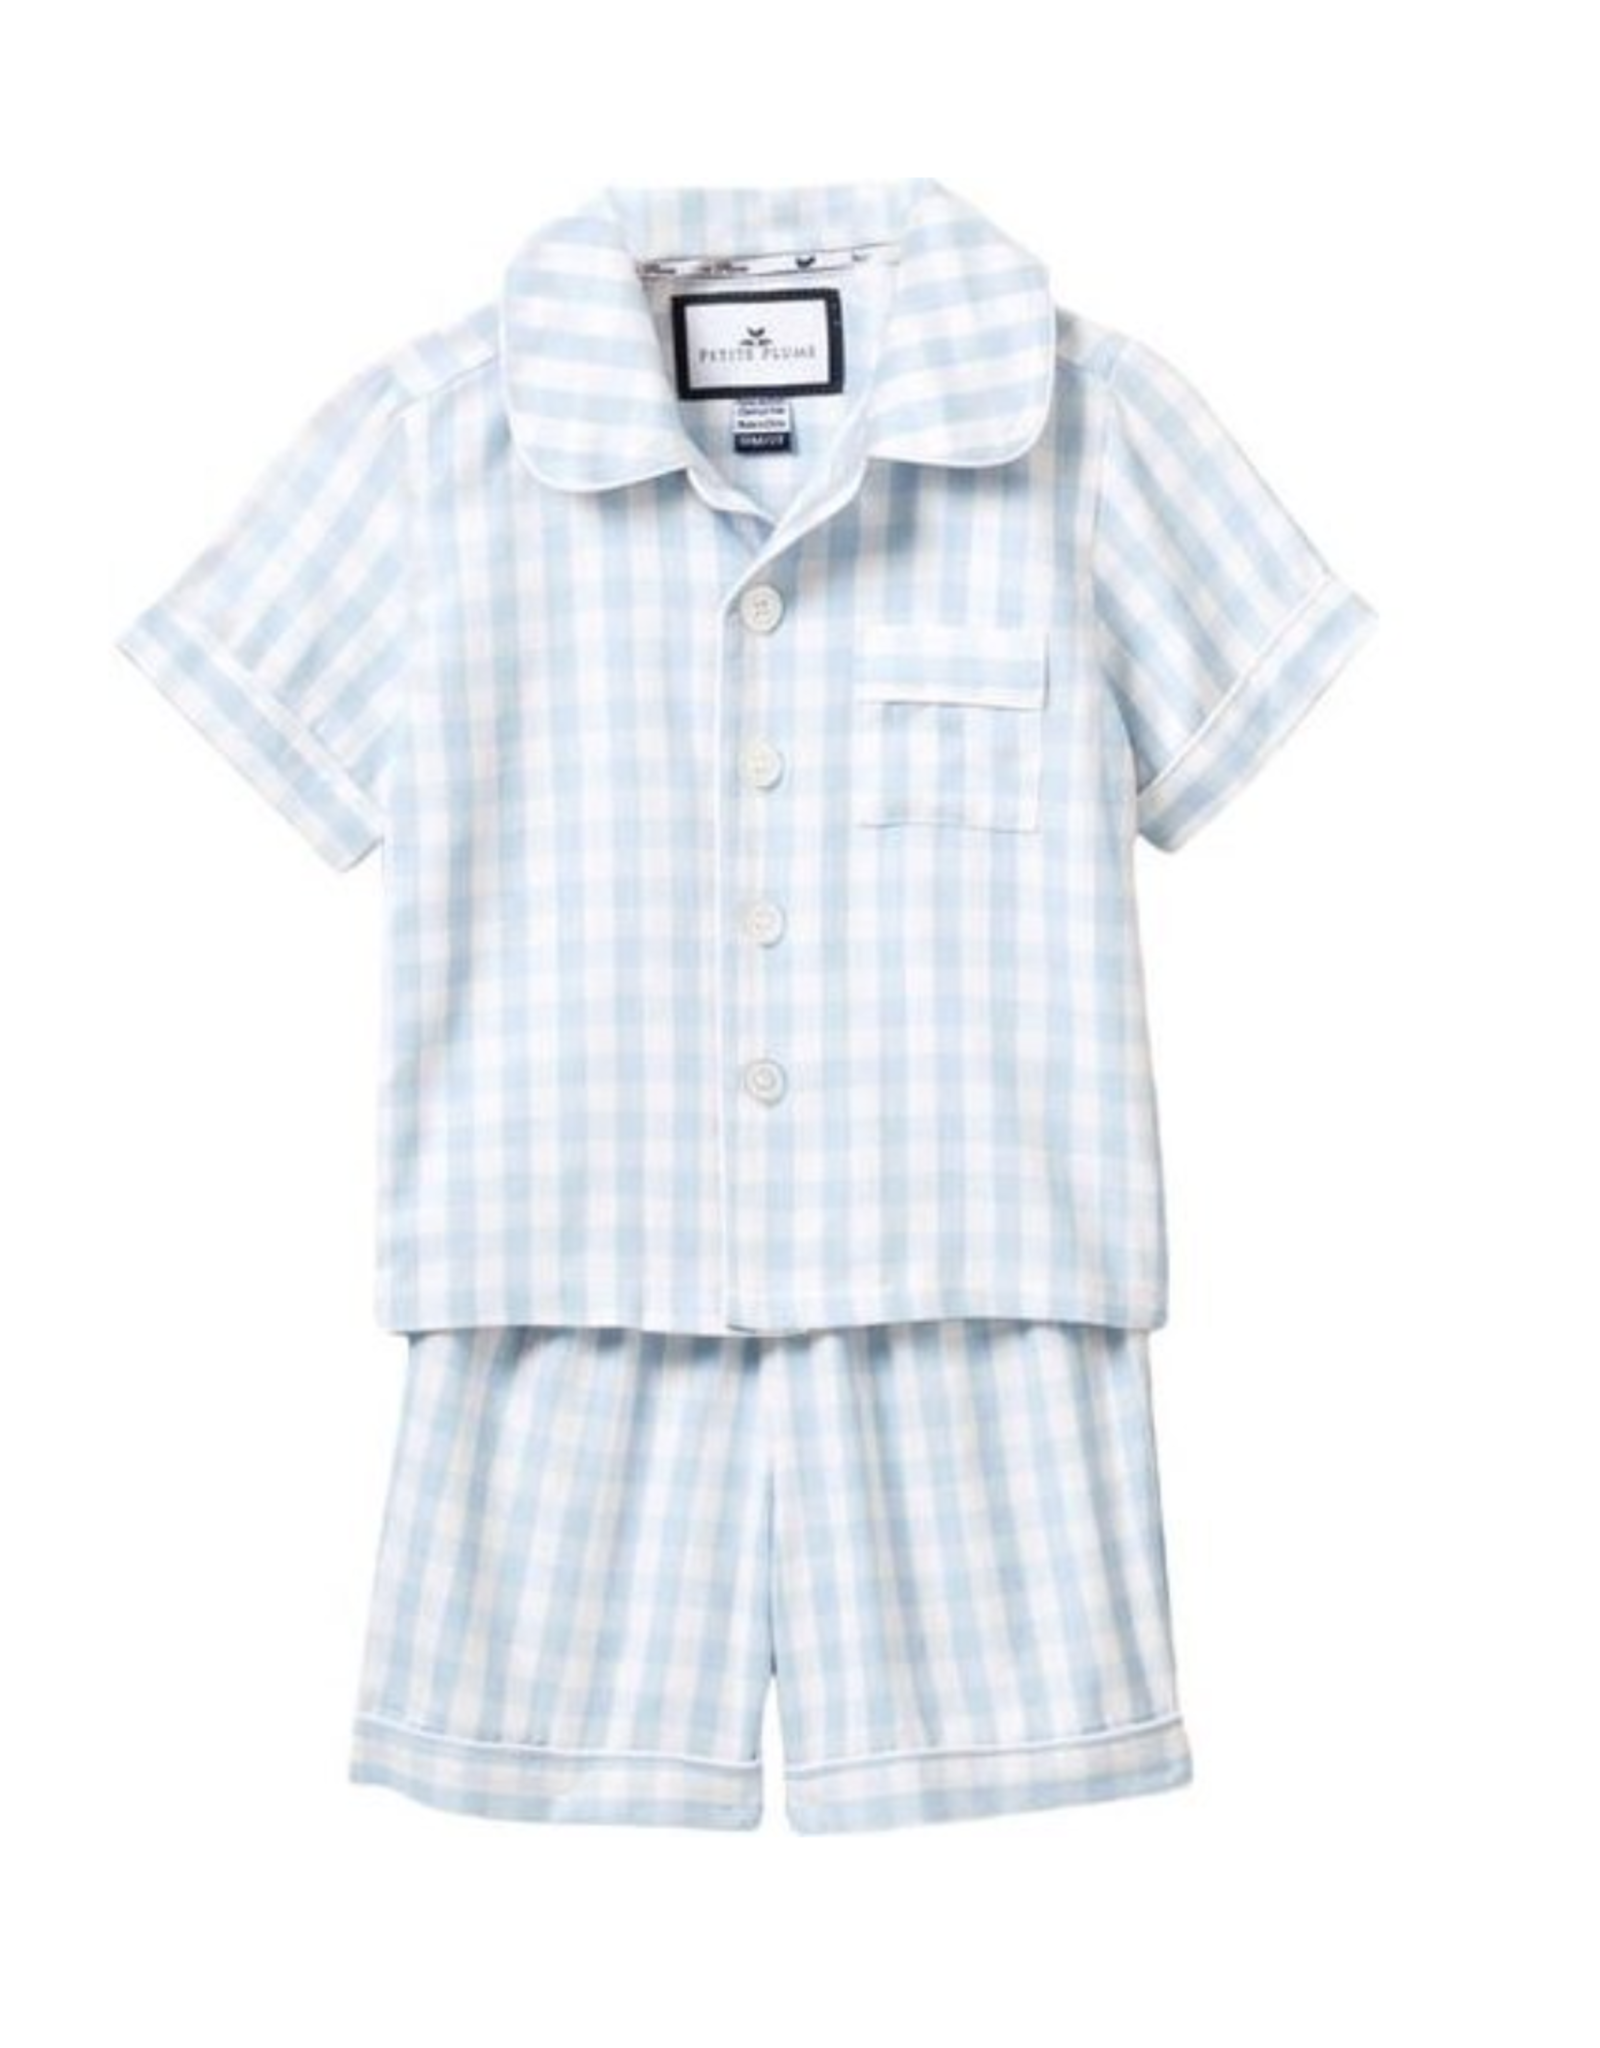 petite plume pajama short set- light blue gingham